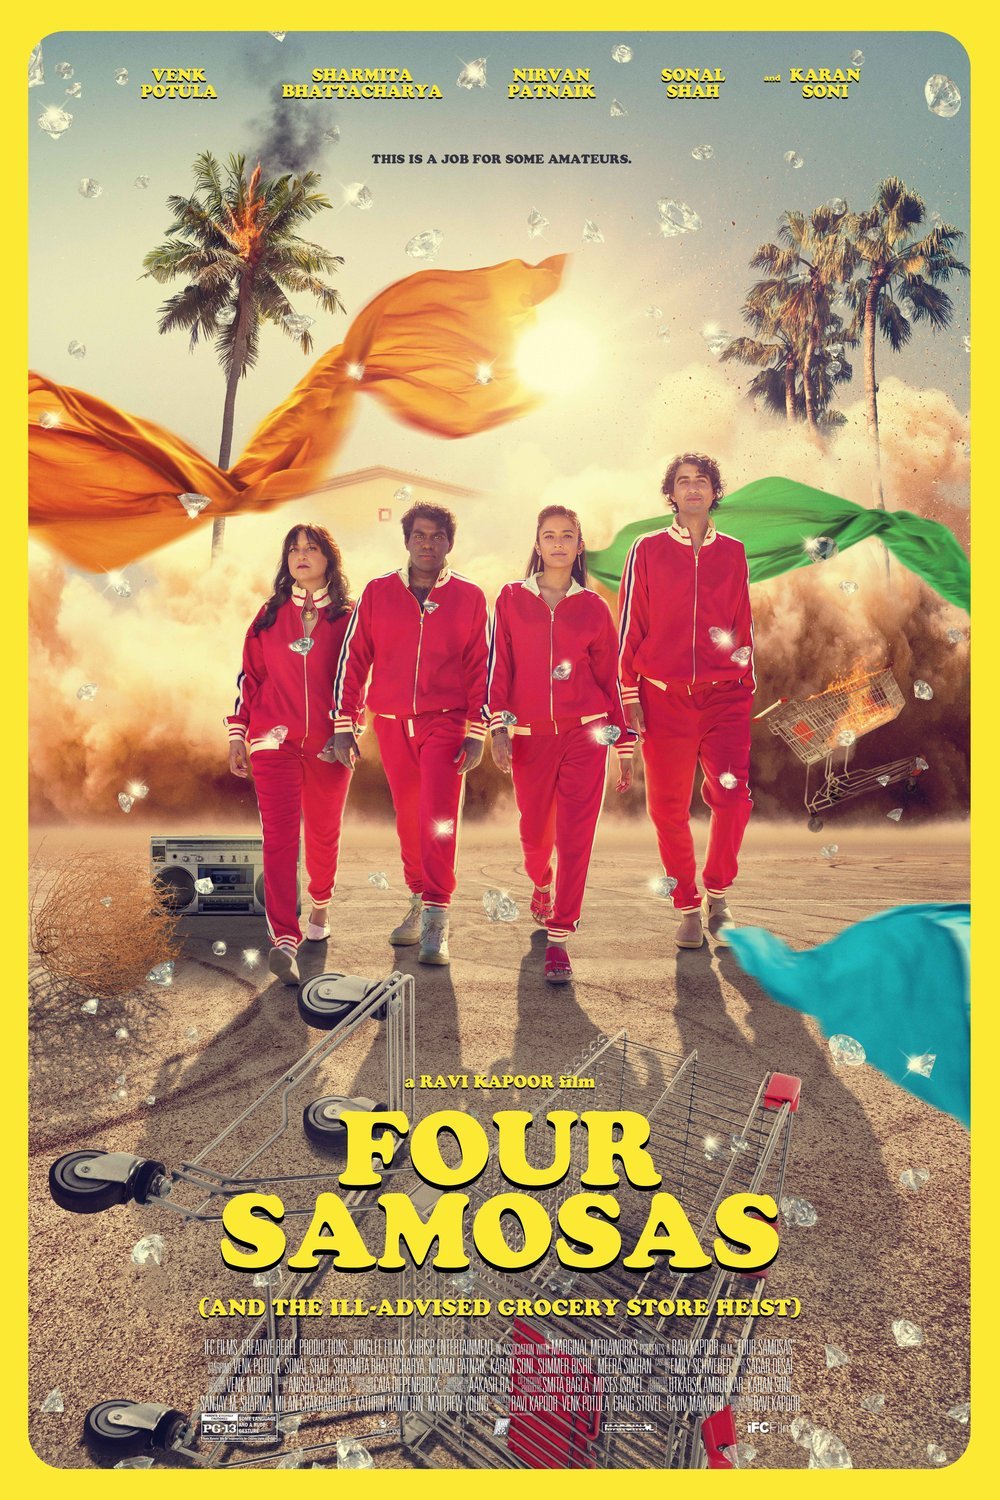 Poster of the movie Four Samosas